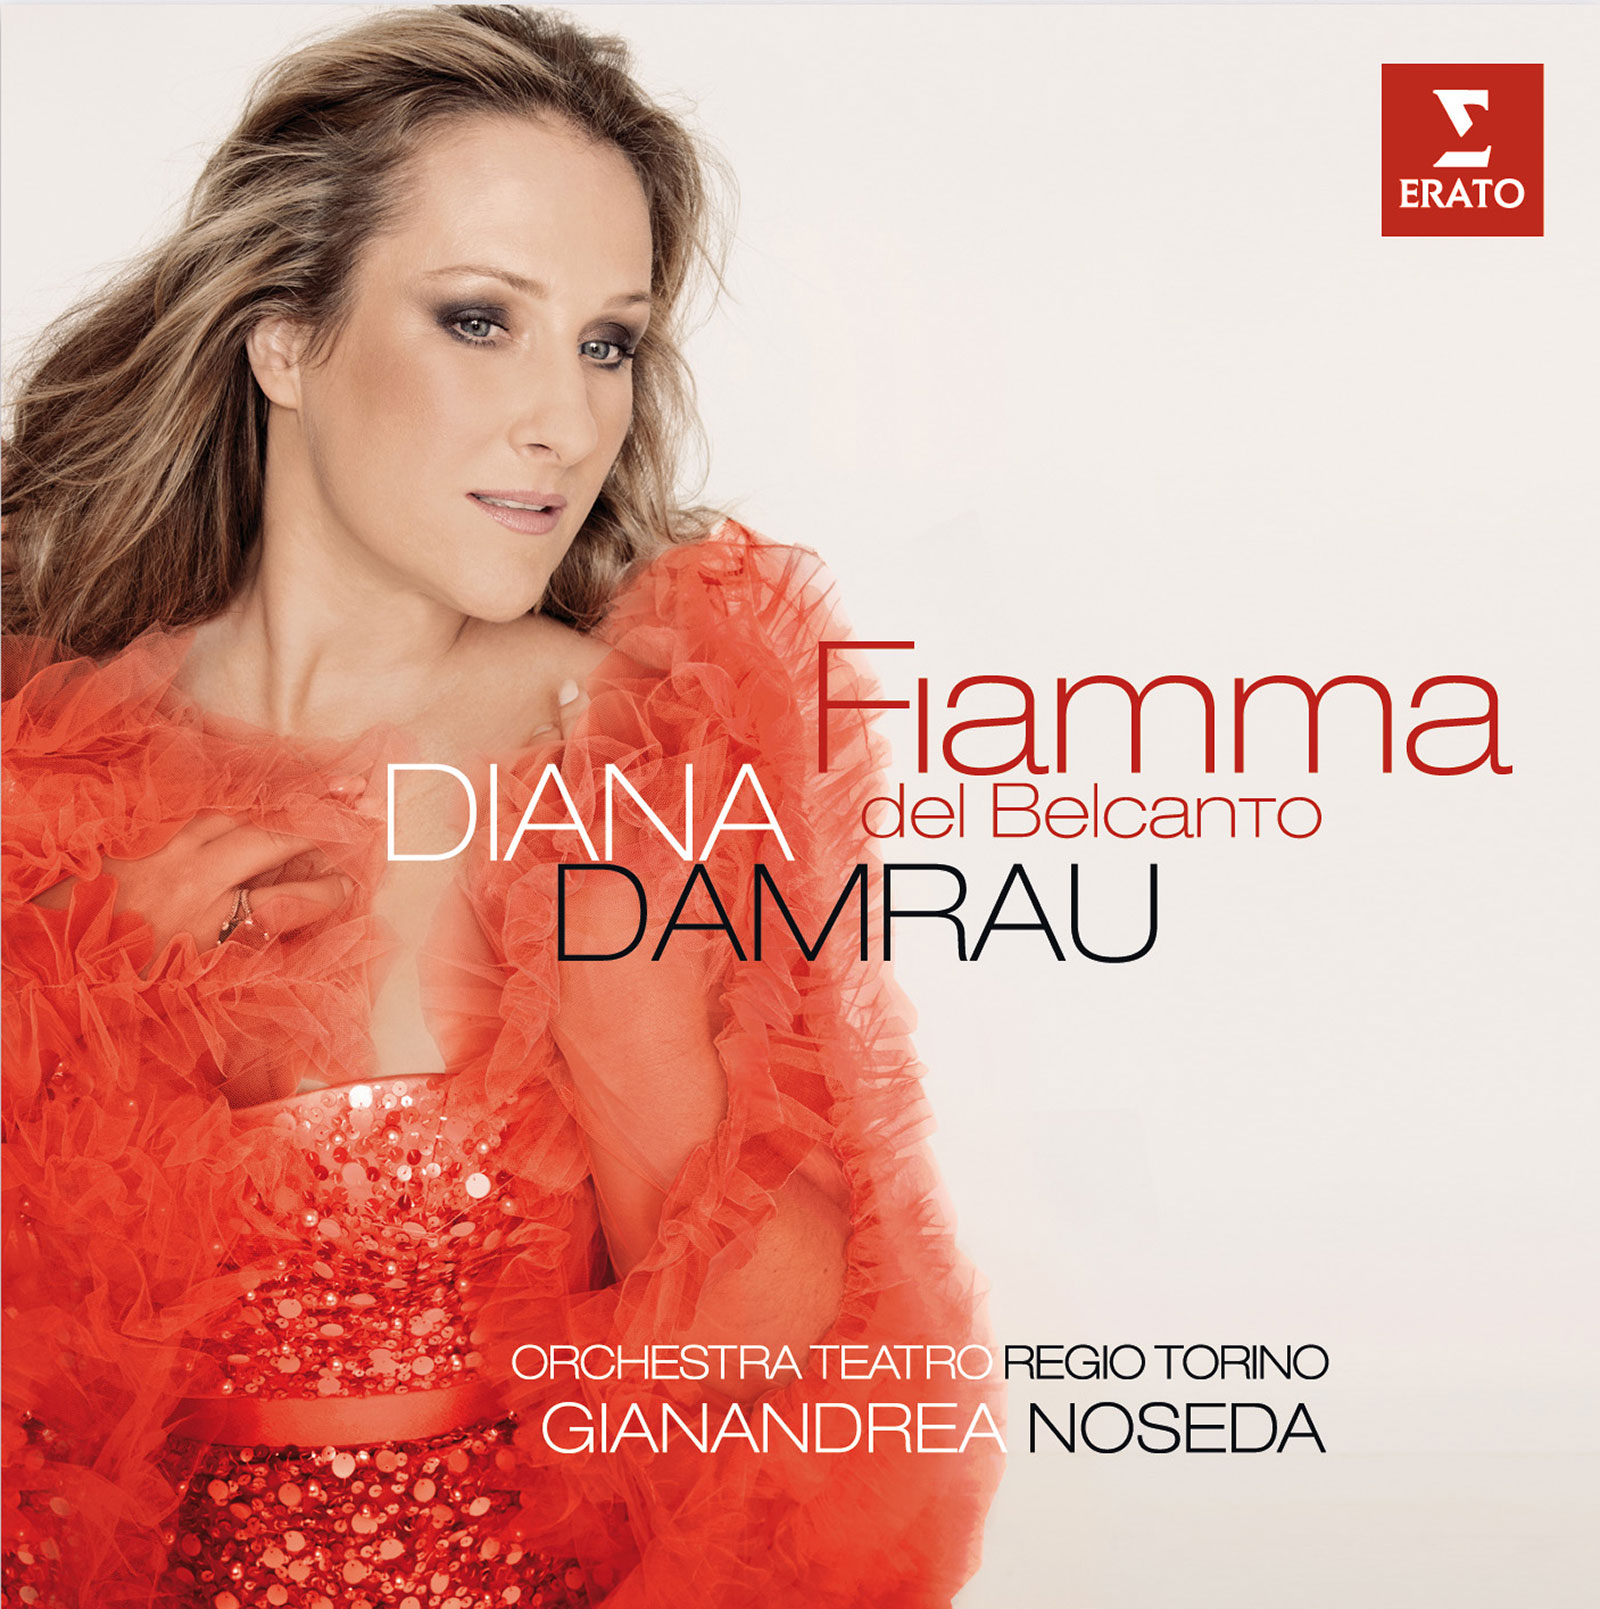 Diana Damrau - Fiamma del Belcanto